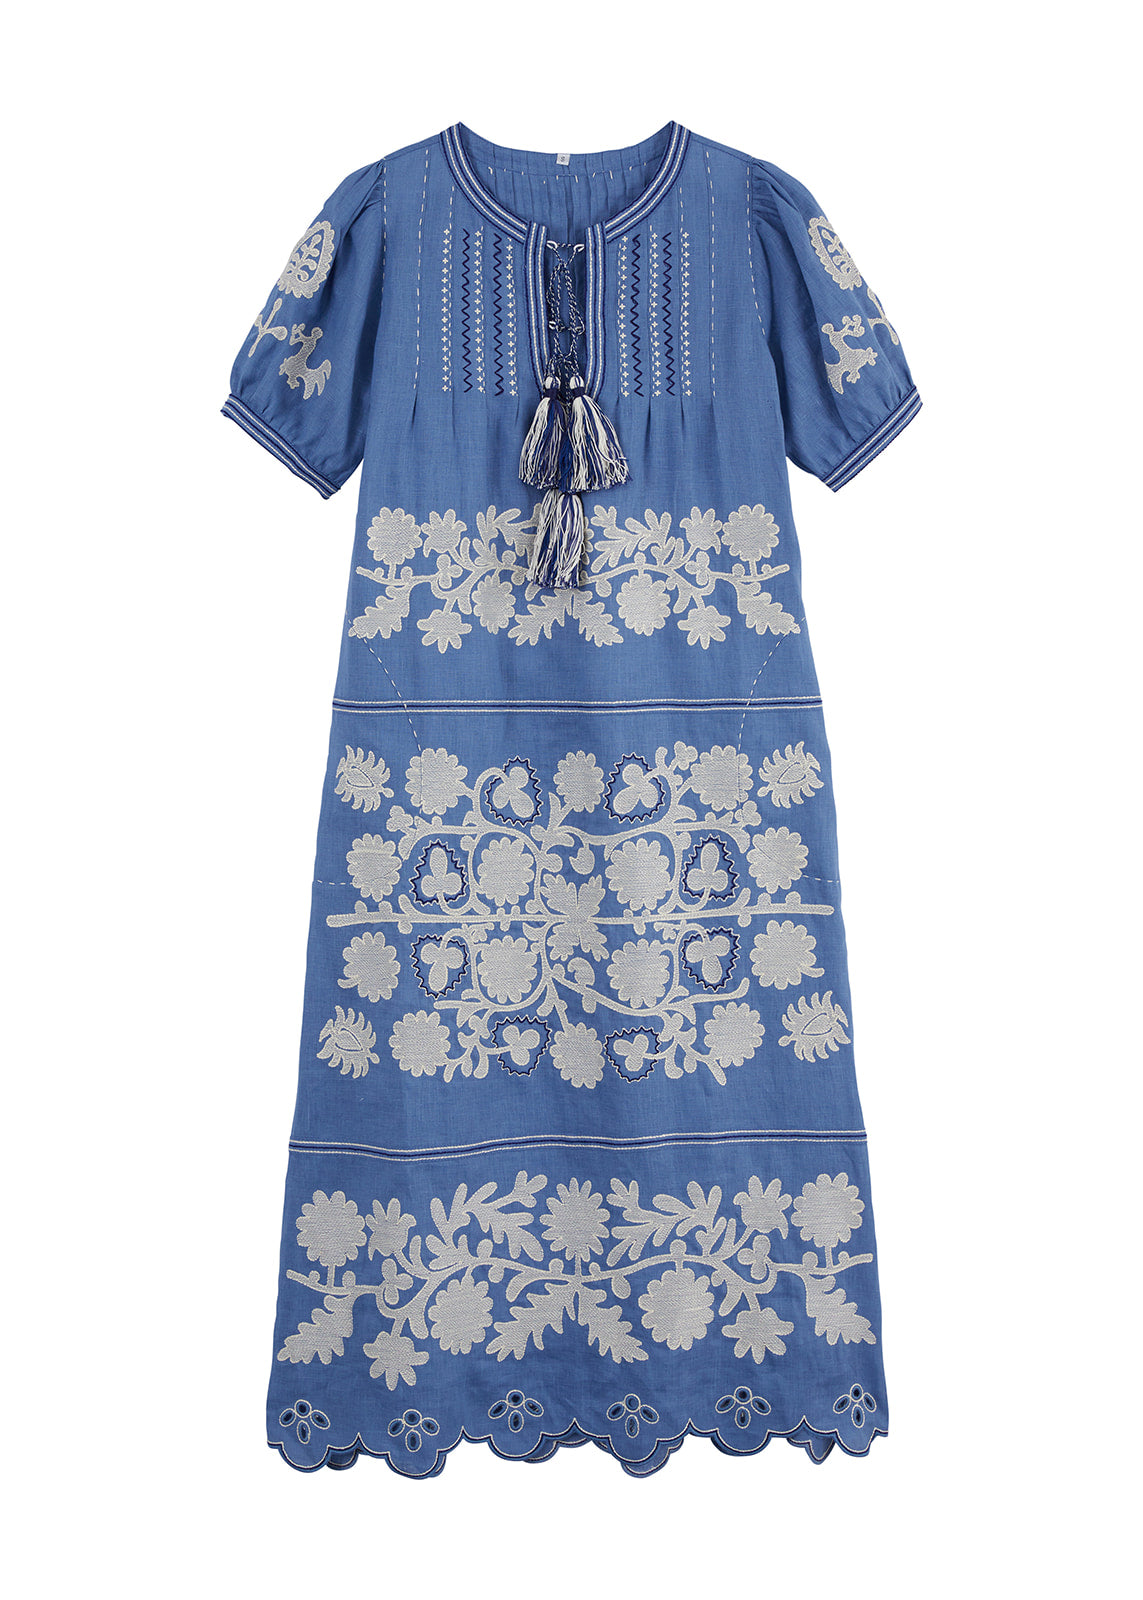 Natalia Ukrainian Embroidered Maxi Dress - French Blue, Navy, White